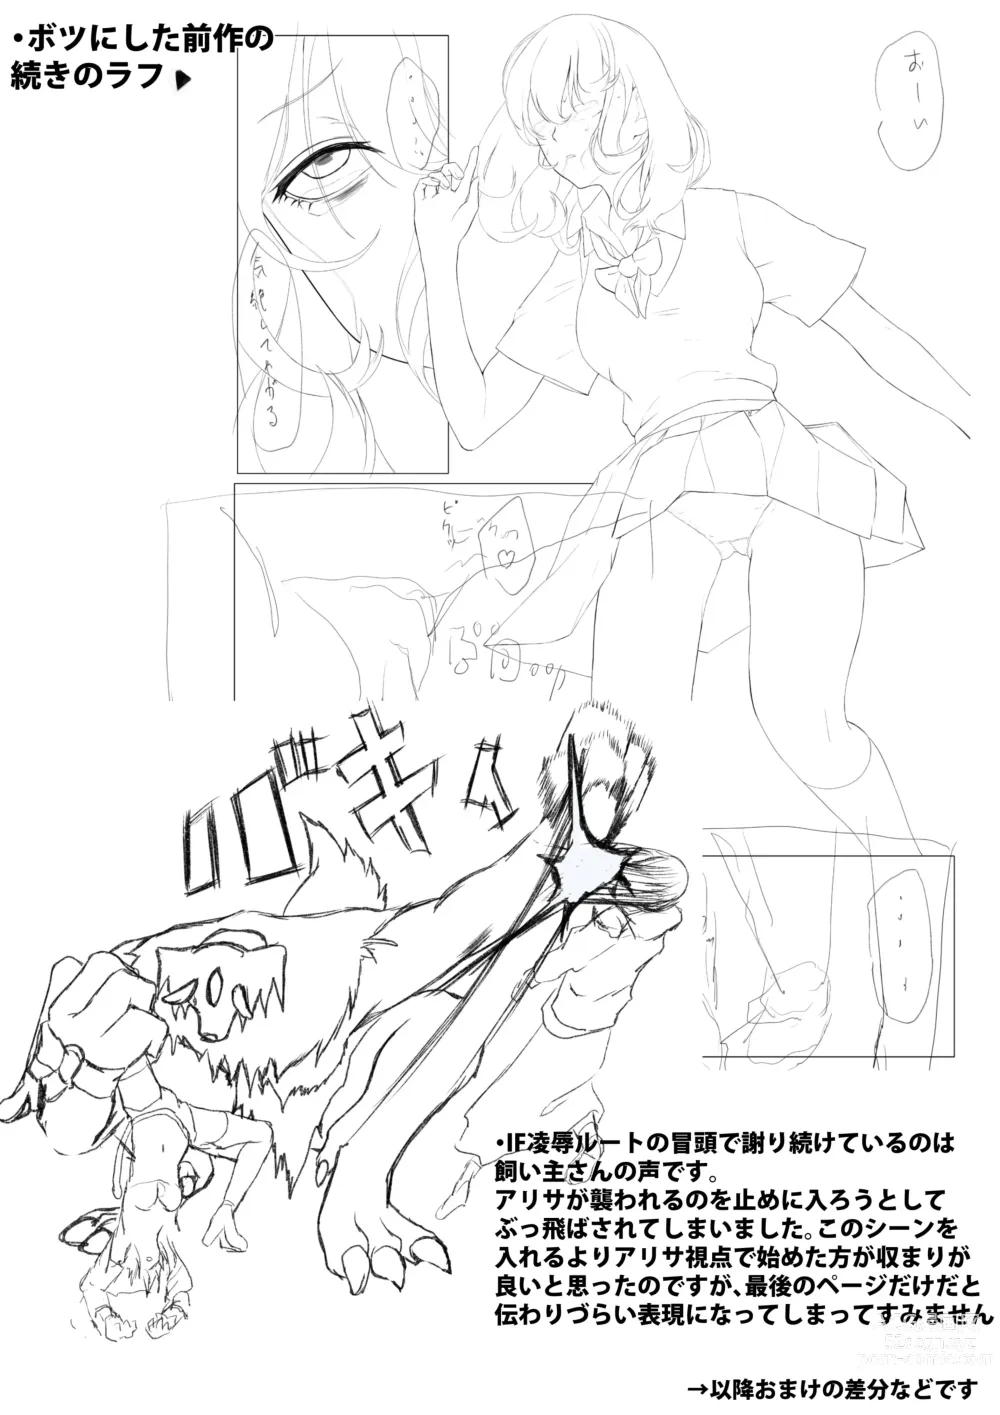 Page 51 of doujinshi 네코미미 변신히로인 실신 패배 능욕 2